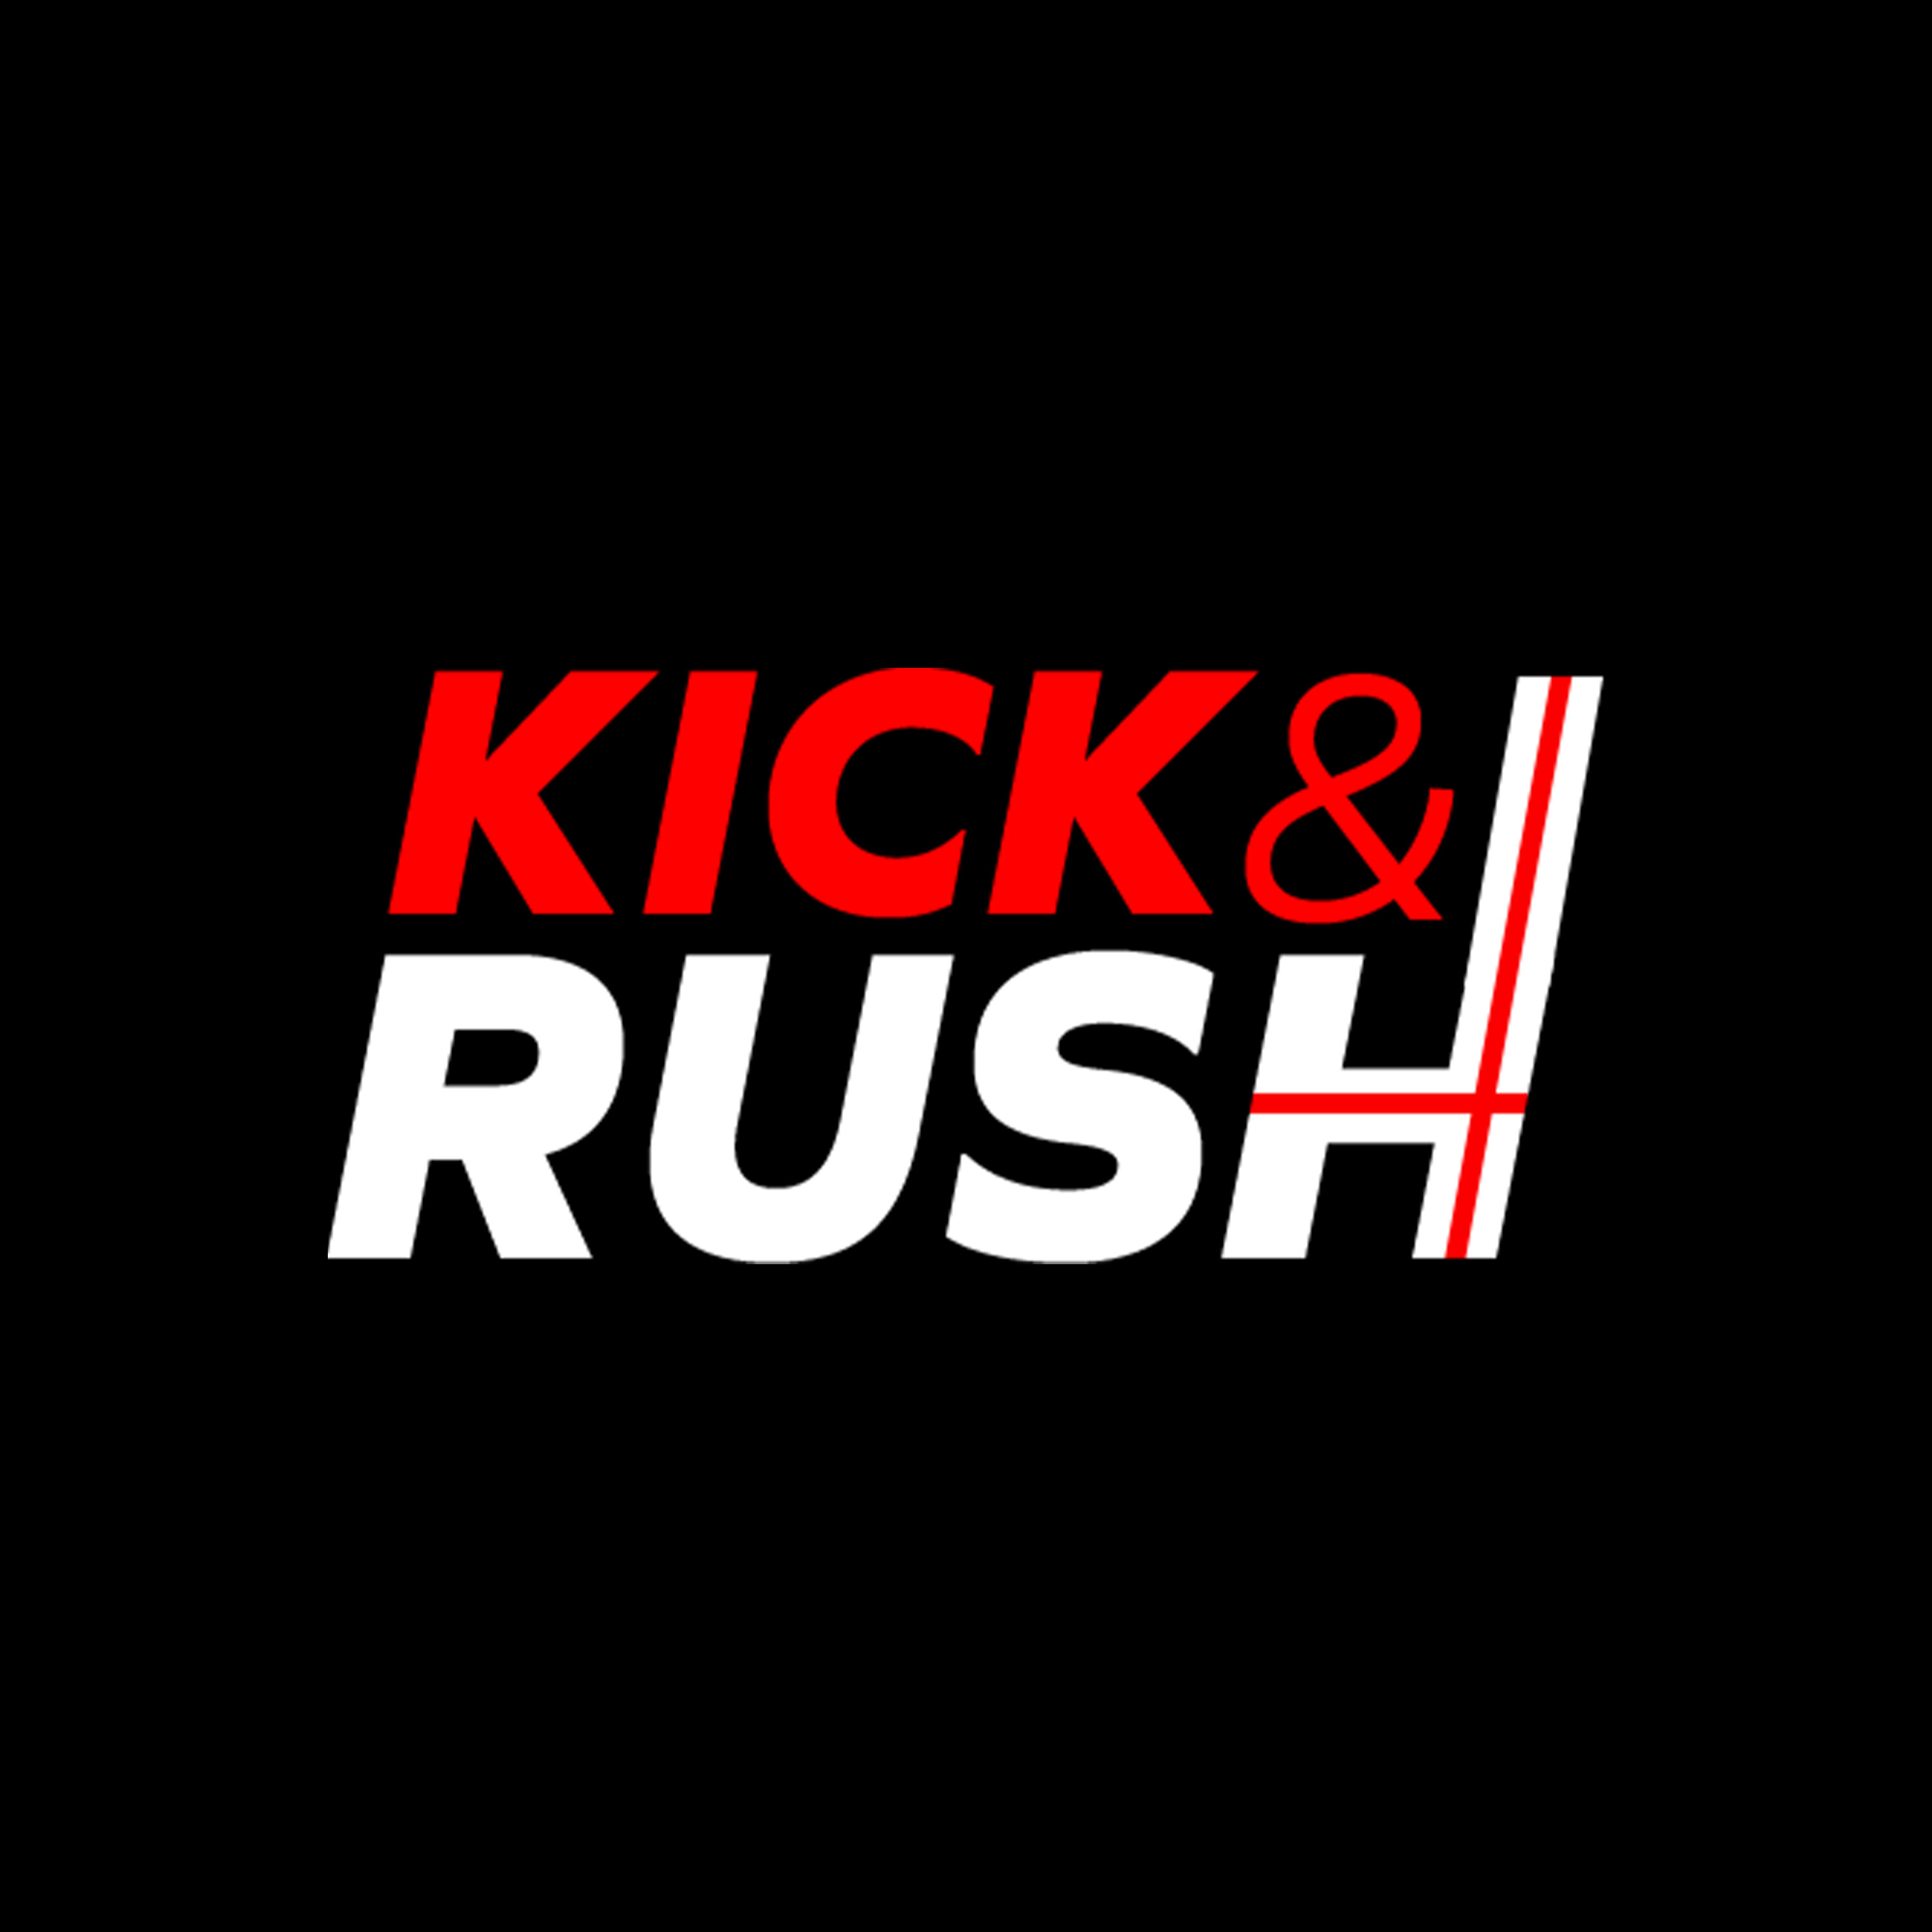 KICK&RUSH - De laatste strohalm